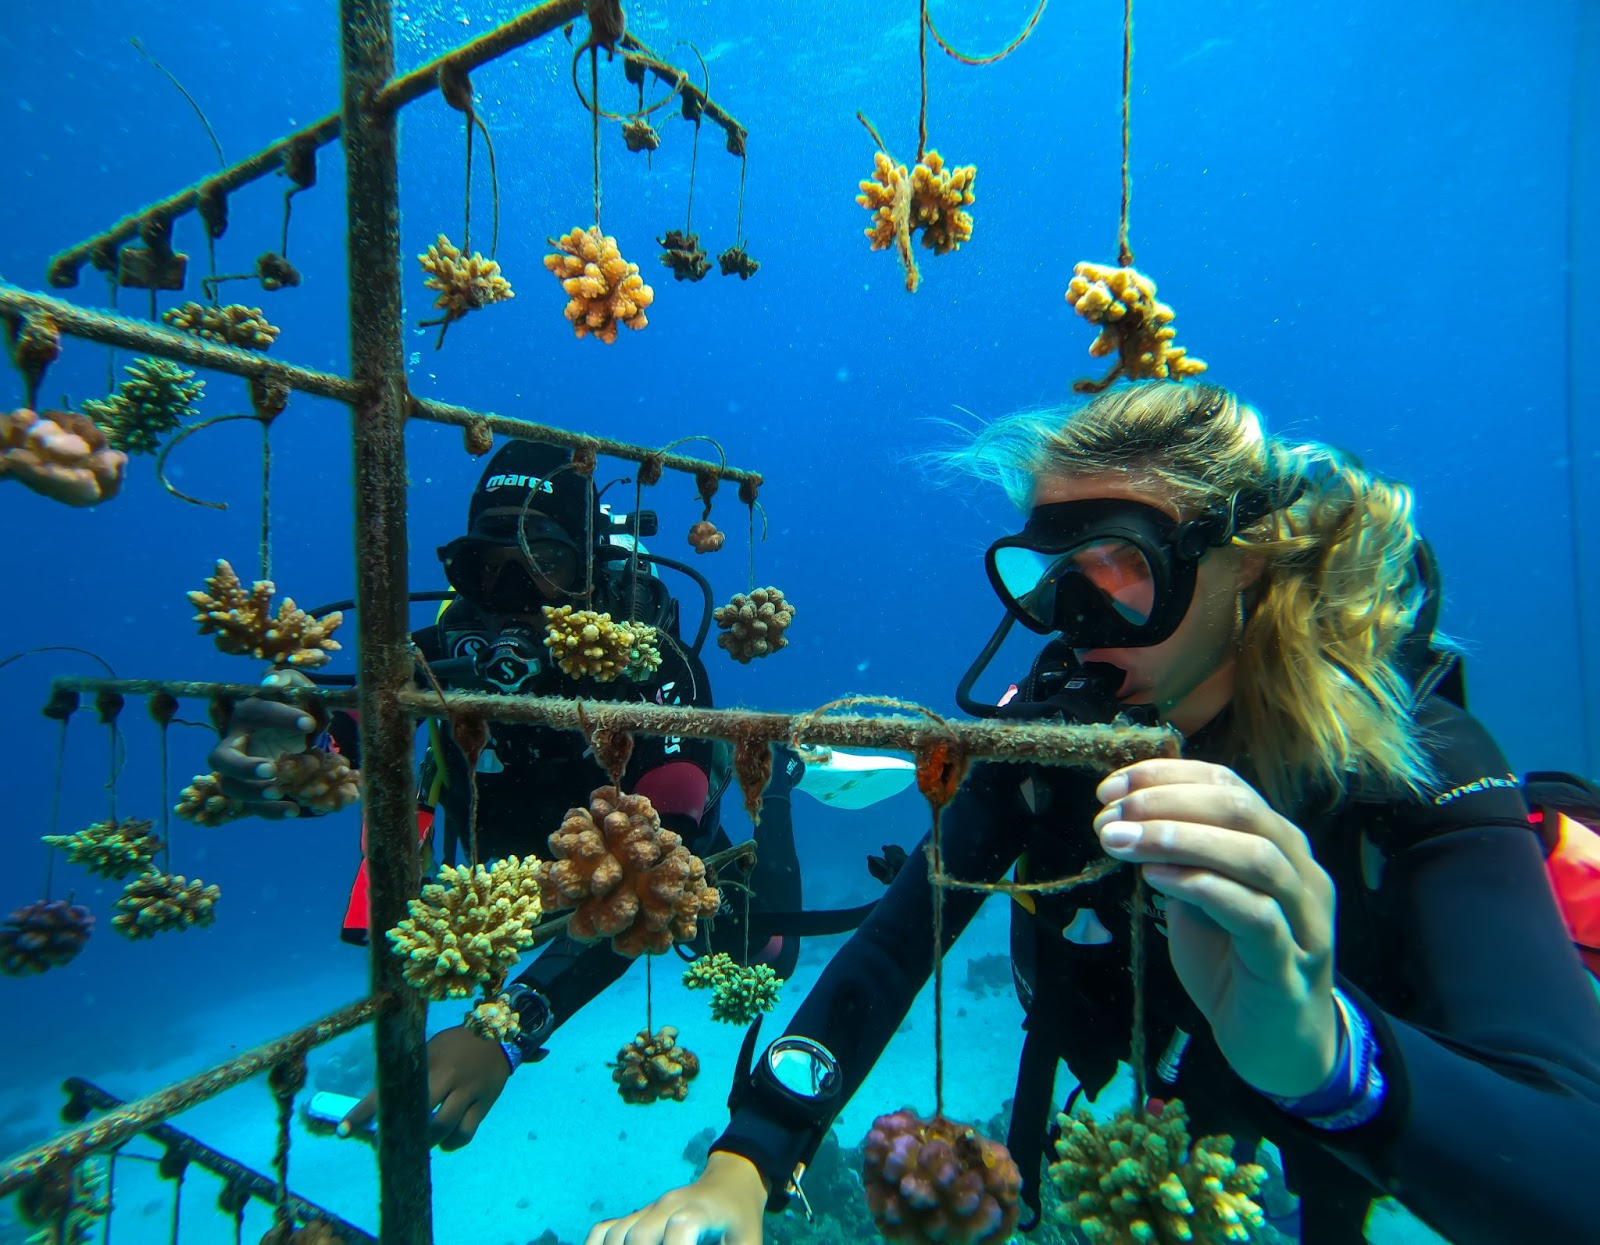 Coral Restoration project at Dodo Divers
Photo credit: Dodo Divers Ltd. 